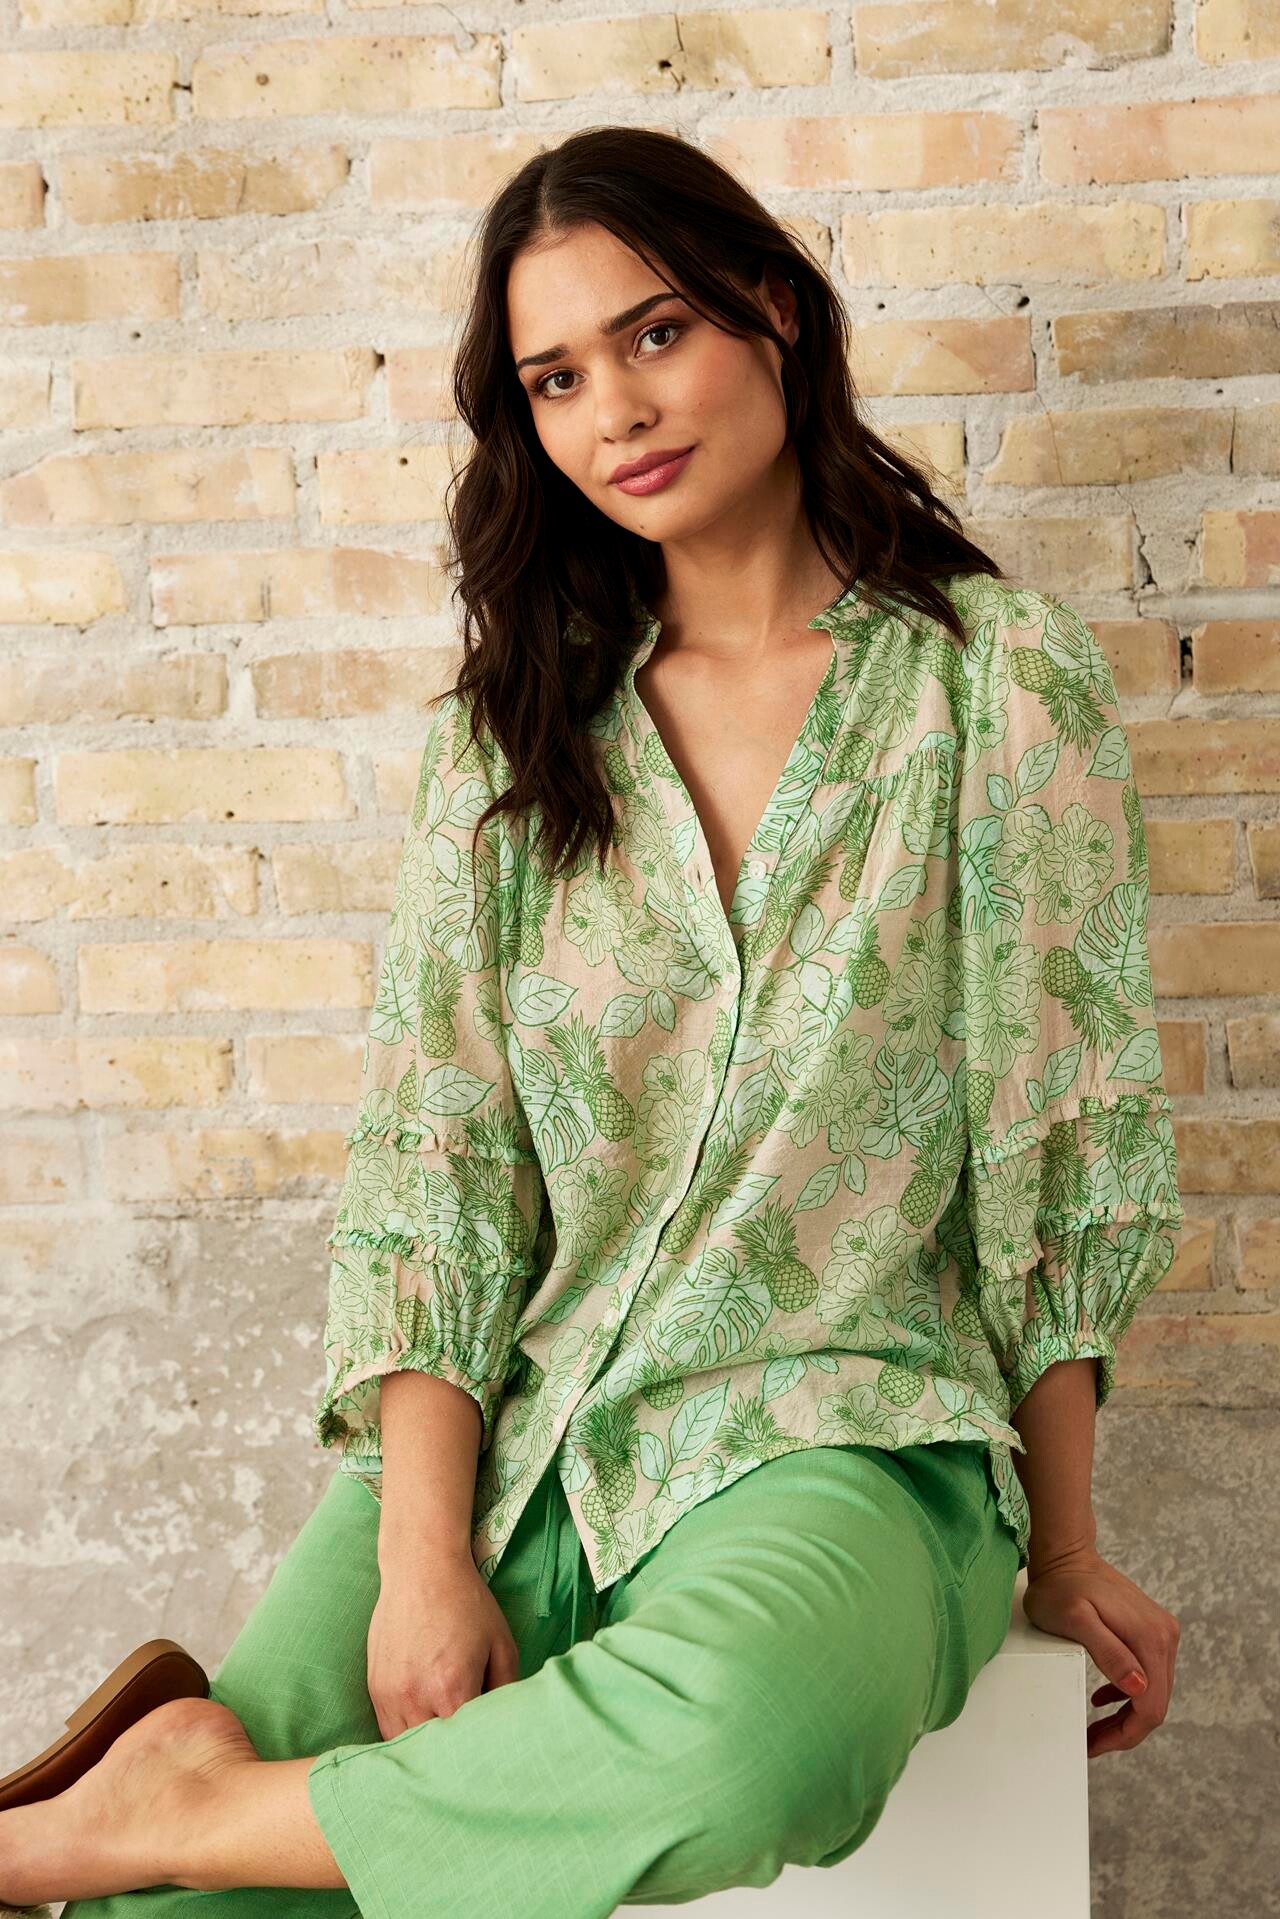 Se IN FRONT Exotic Skjorte, Farve: Green, Størrelse: L, Dame hos Infront Women